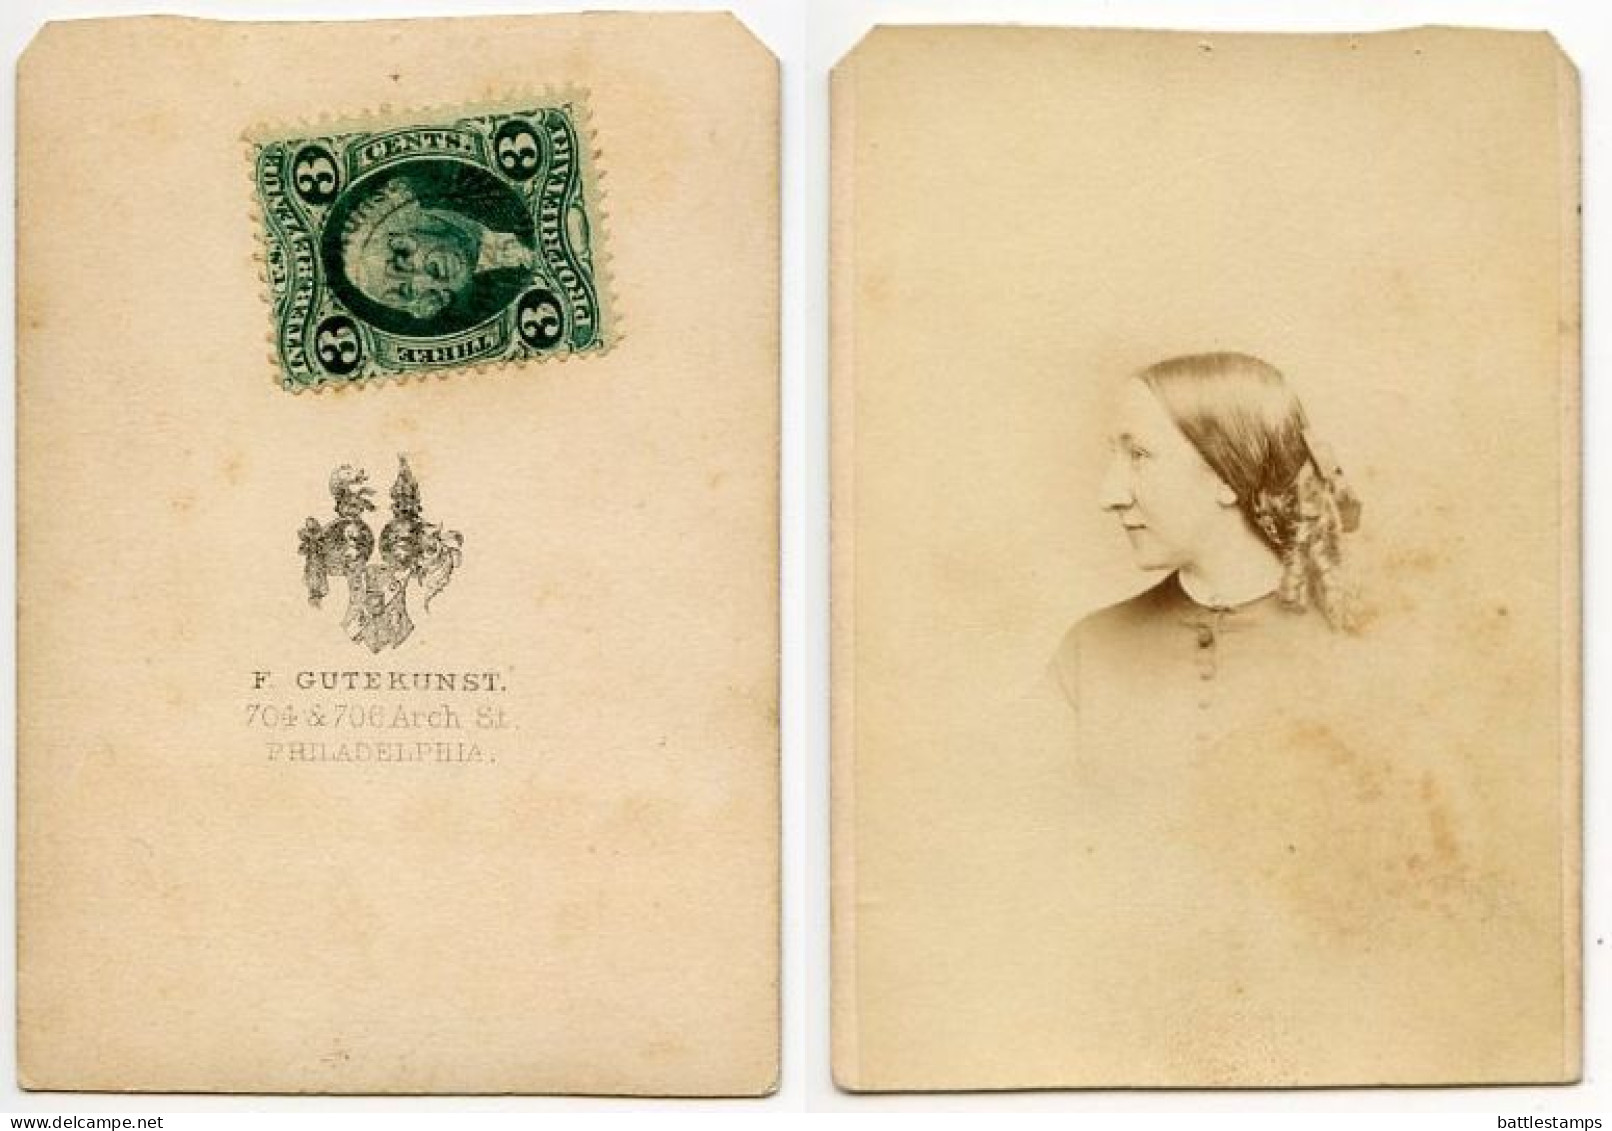 United States 1860‘s Photograph, Woman - F. Gutekun St., Philadelphia Pennsylvania, Scott R18c Revenue Stamp - Fiscaux